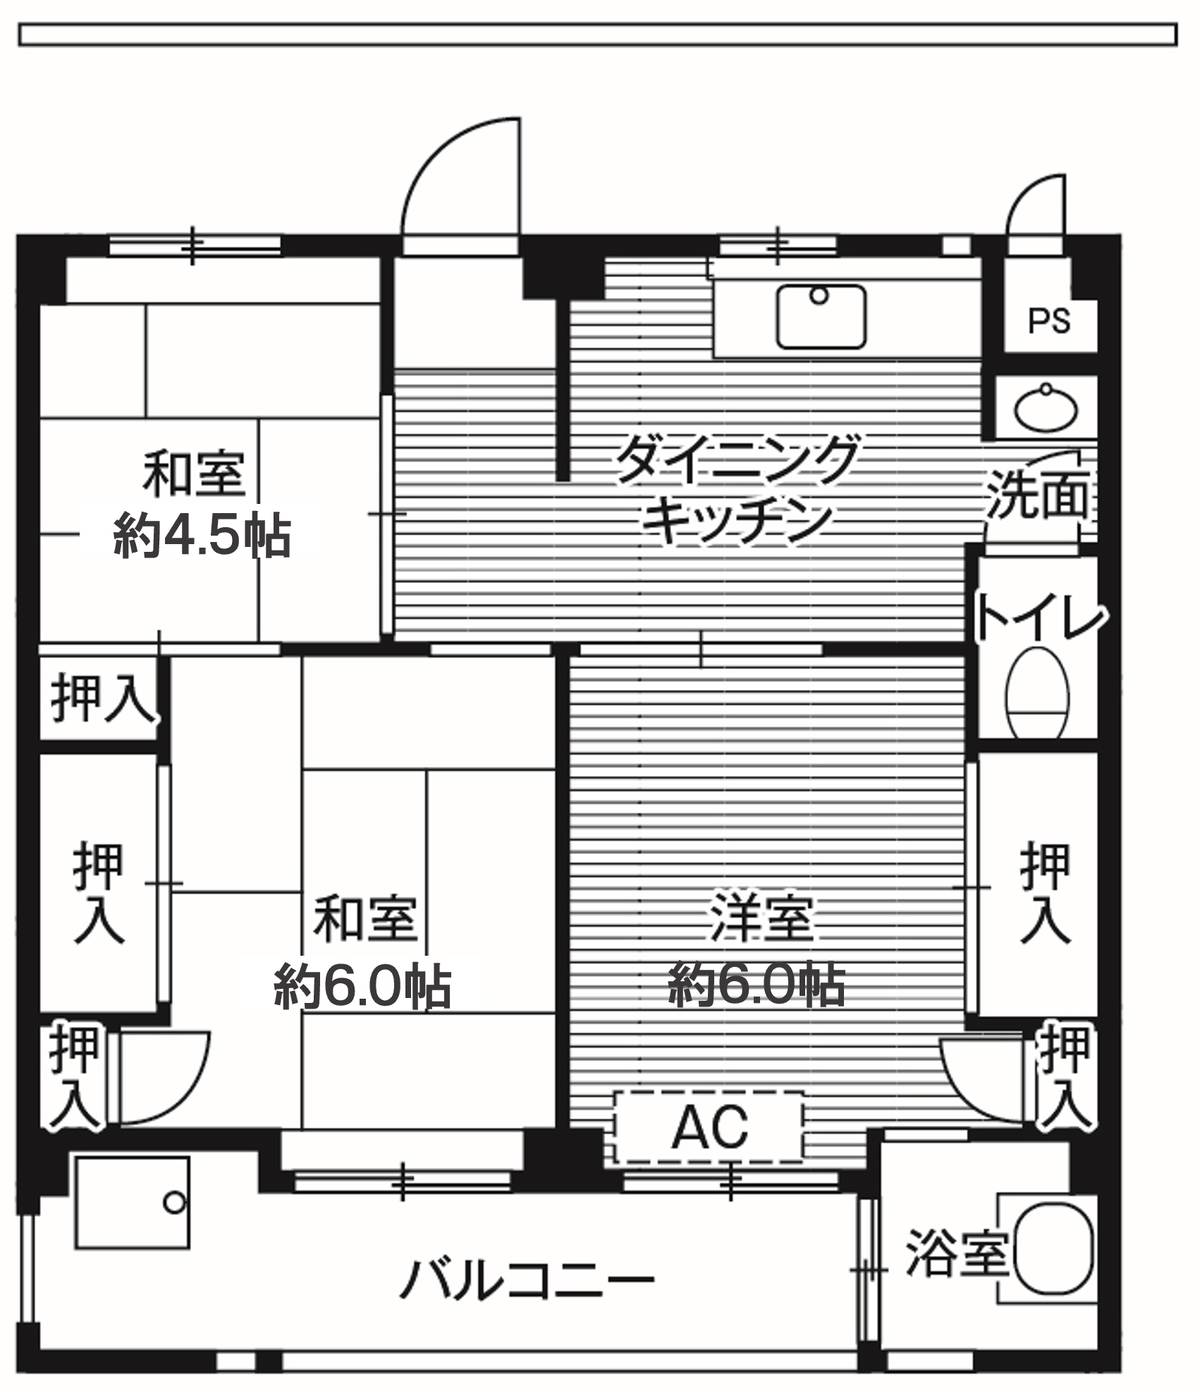 2LDK floorplan of Village House Ageo in Ageo-shi